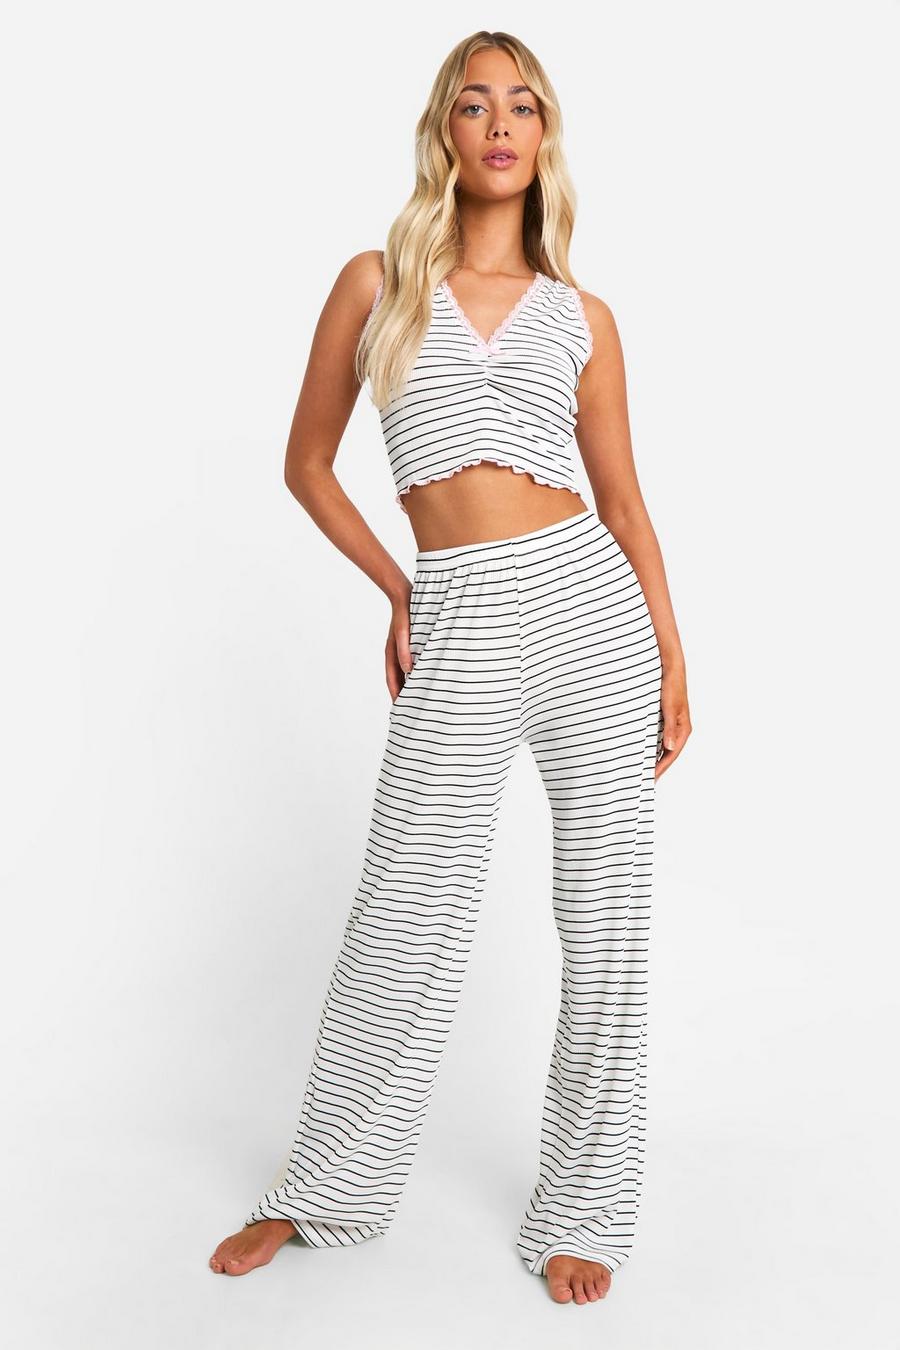 Cream Stripe Lace Tank And Pants Pyjama Set